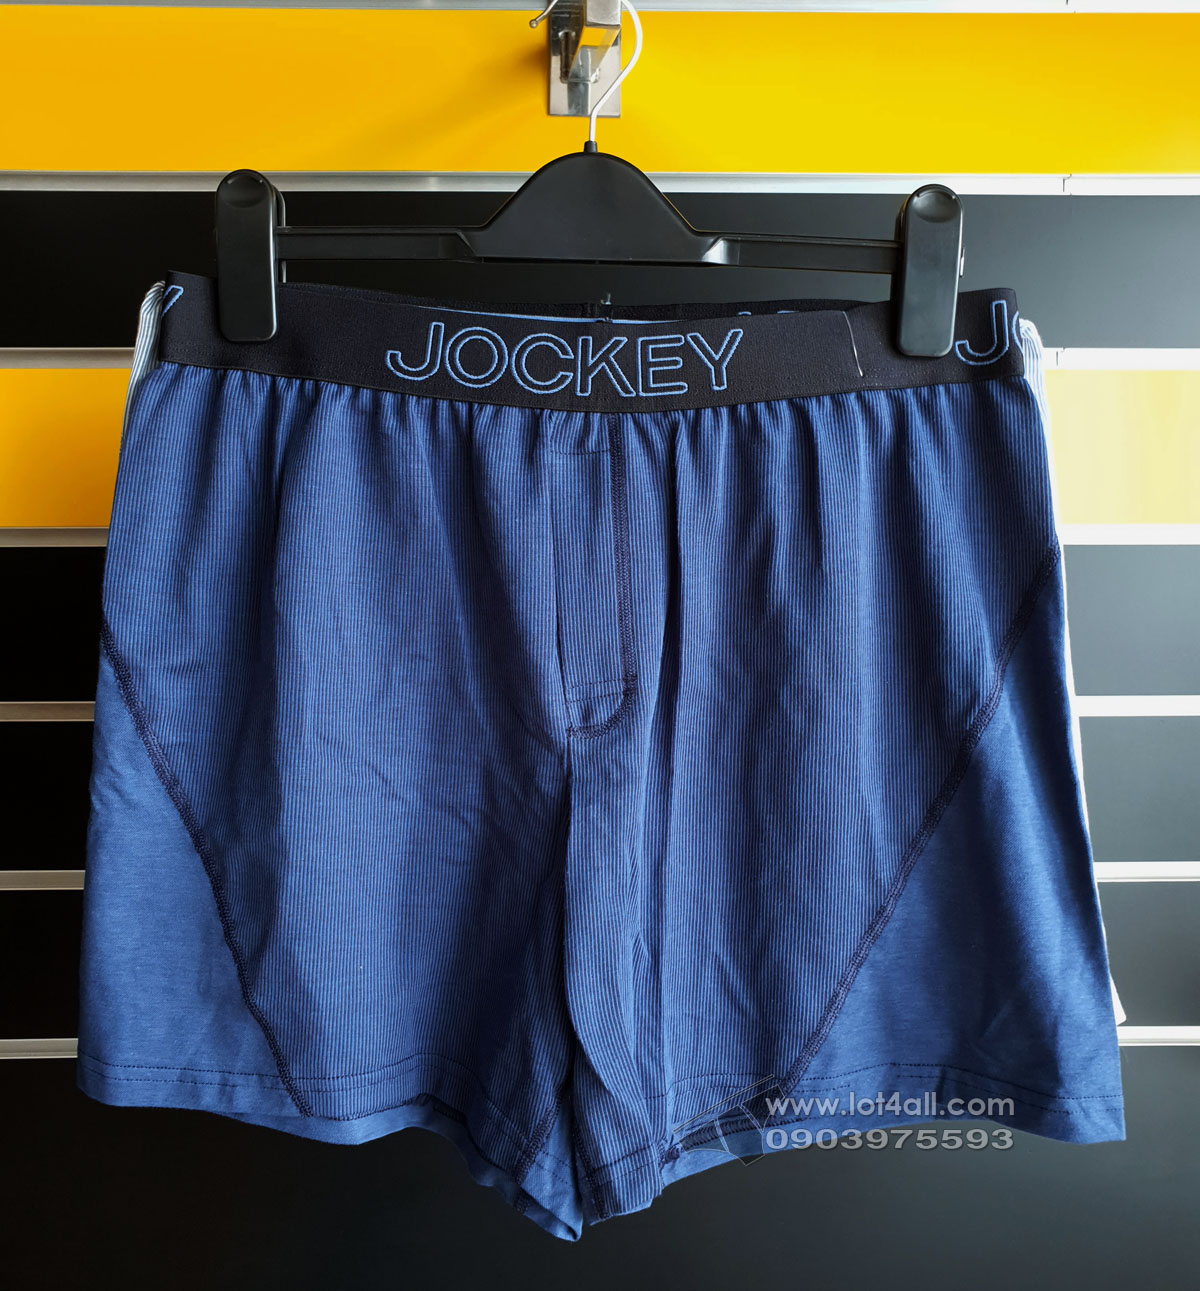 Quần boxer nam Jockey Knit No Bunch 2-pack Blue Pinstripe/Solid